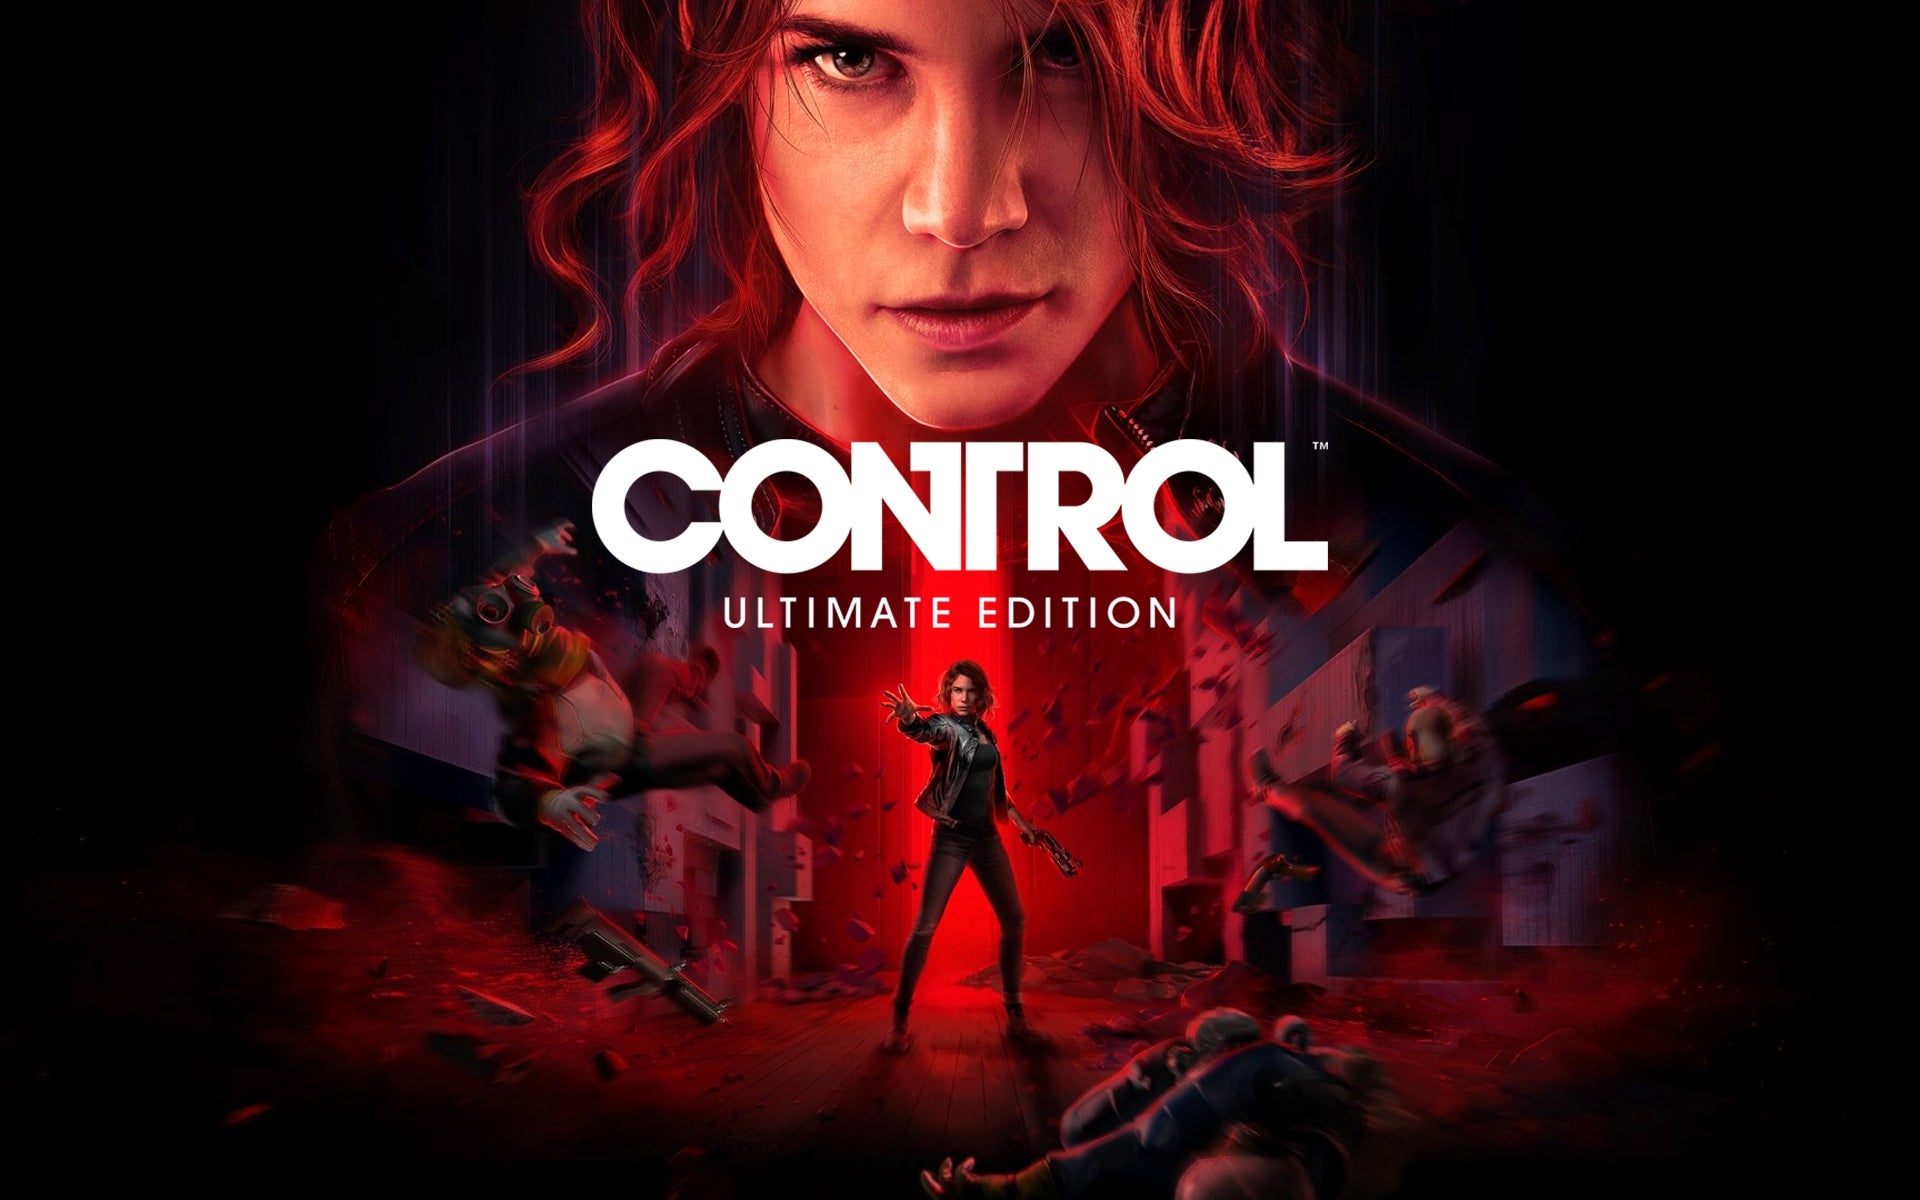 Imagem para Control Ultimate Edition usará as funcionalidades do DualSense na PS5